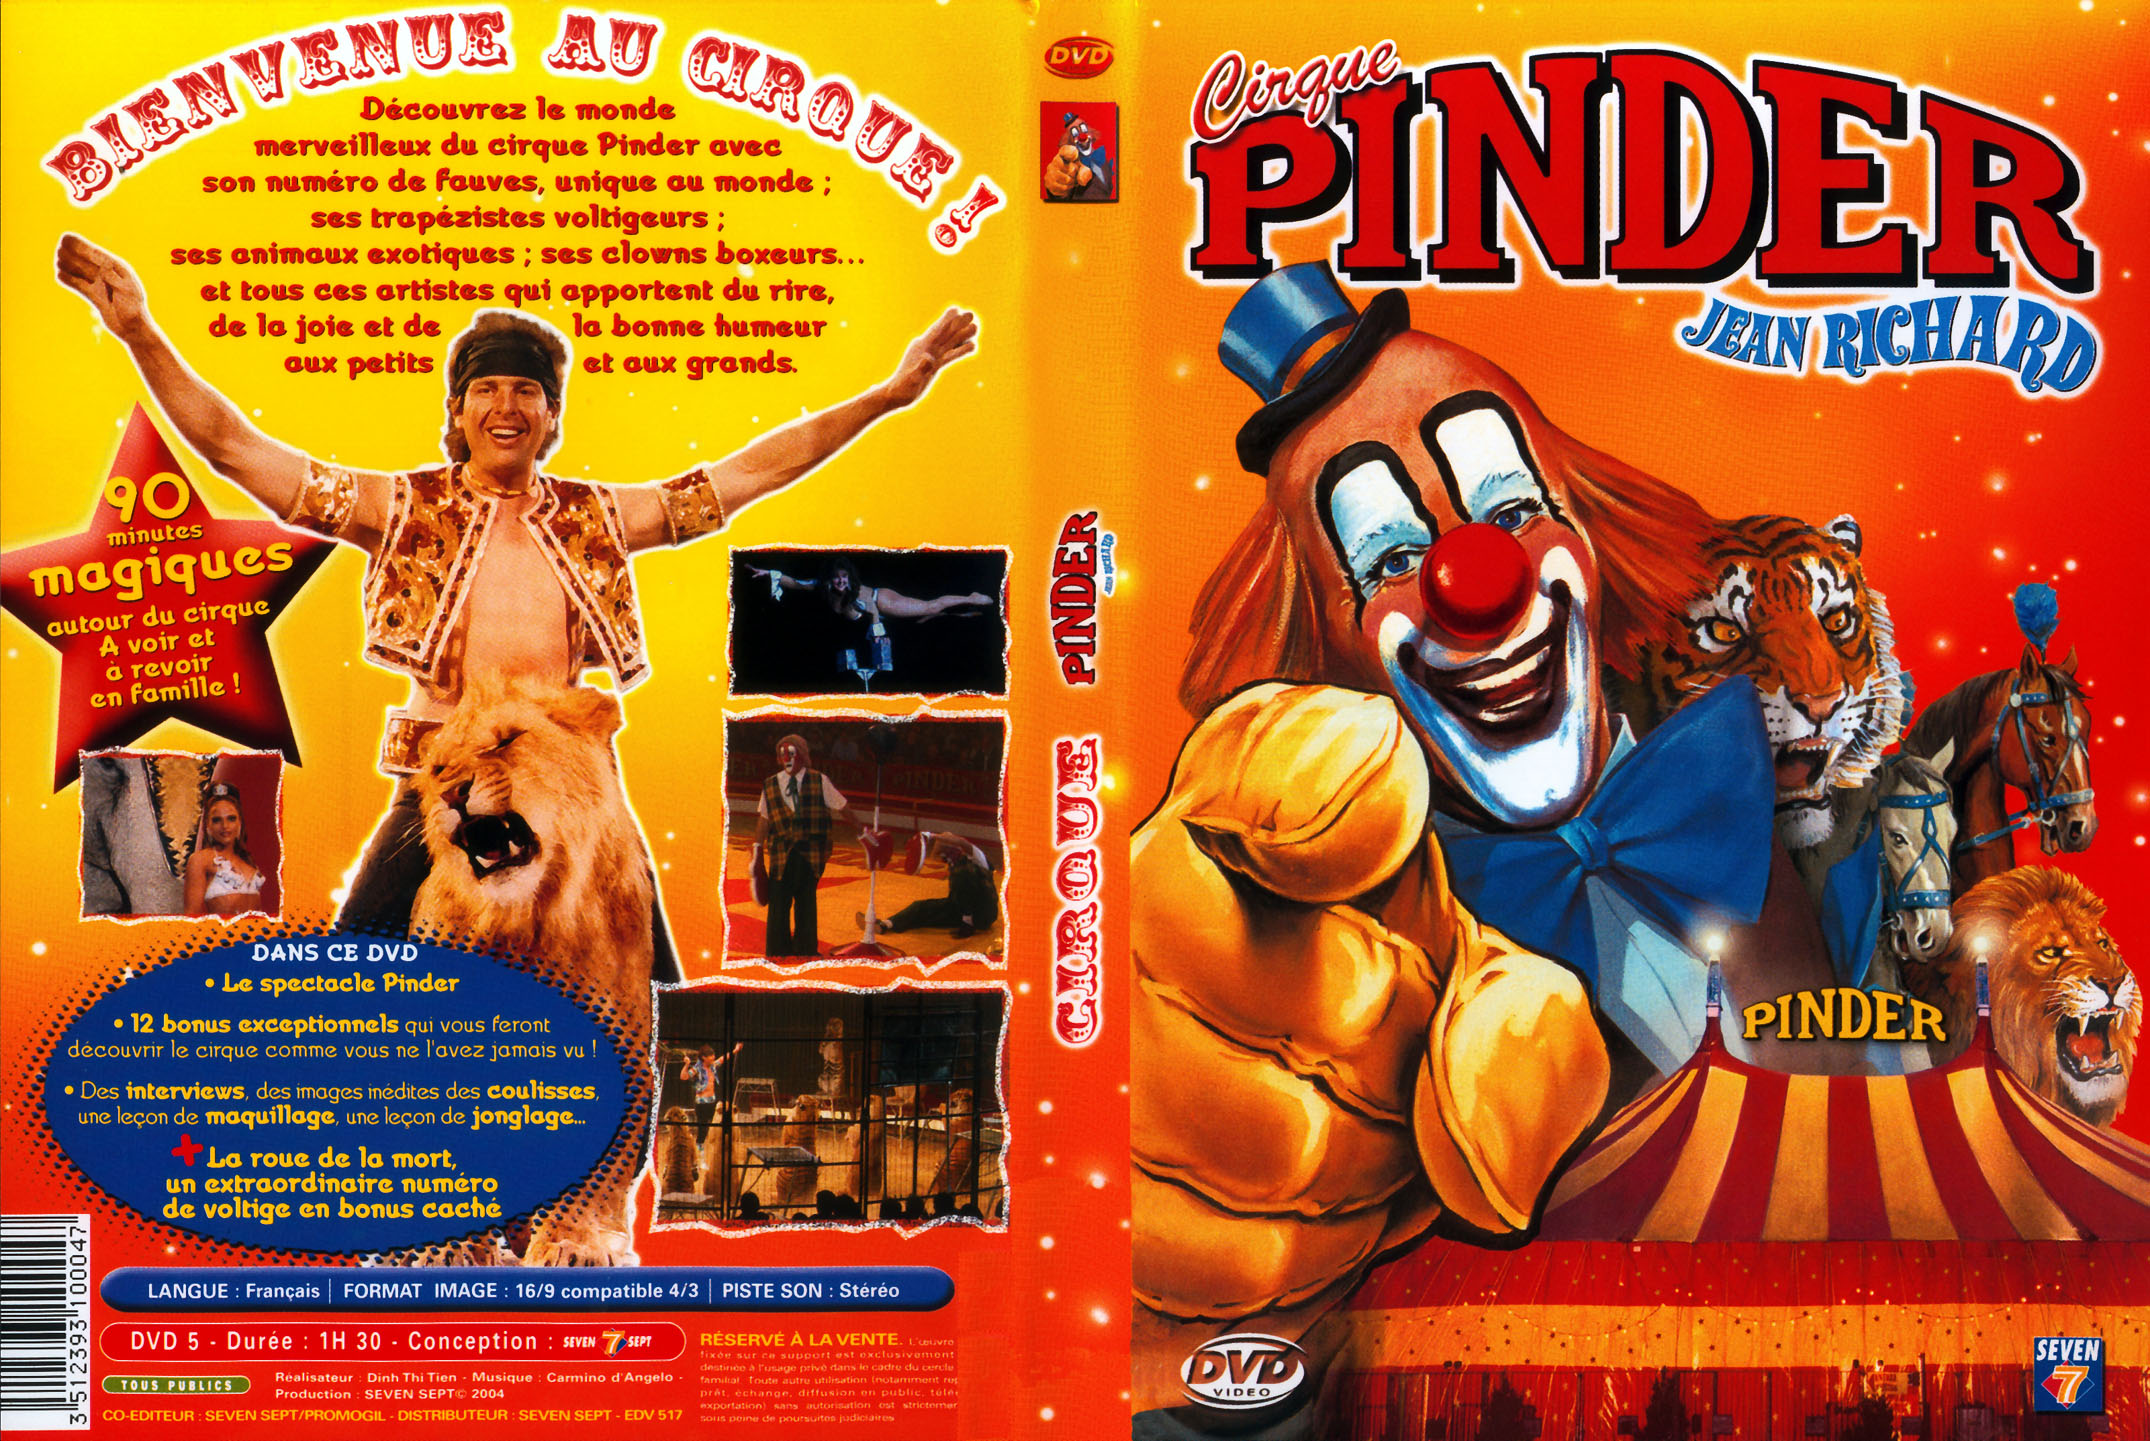 Jaquette DVD Cirque Pinder Jean Richard